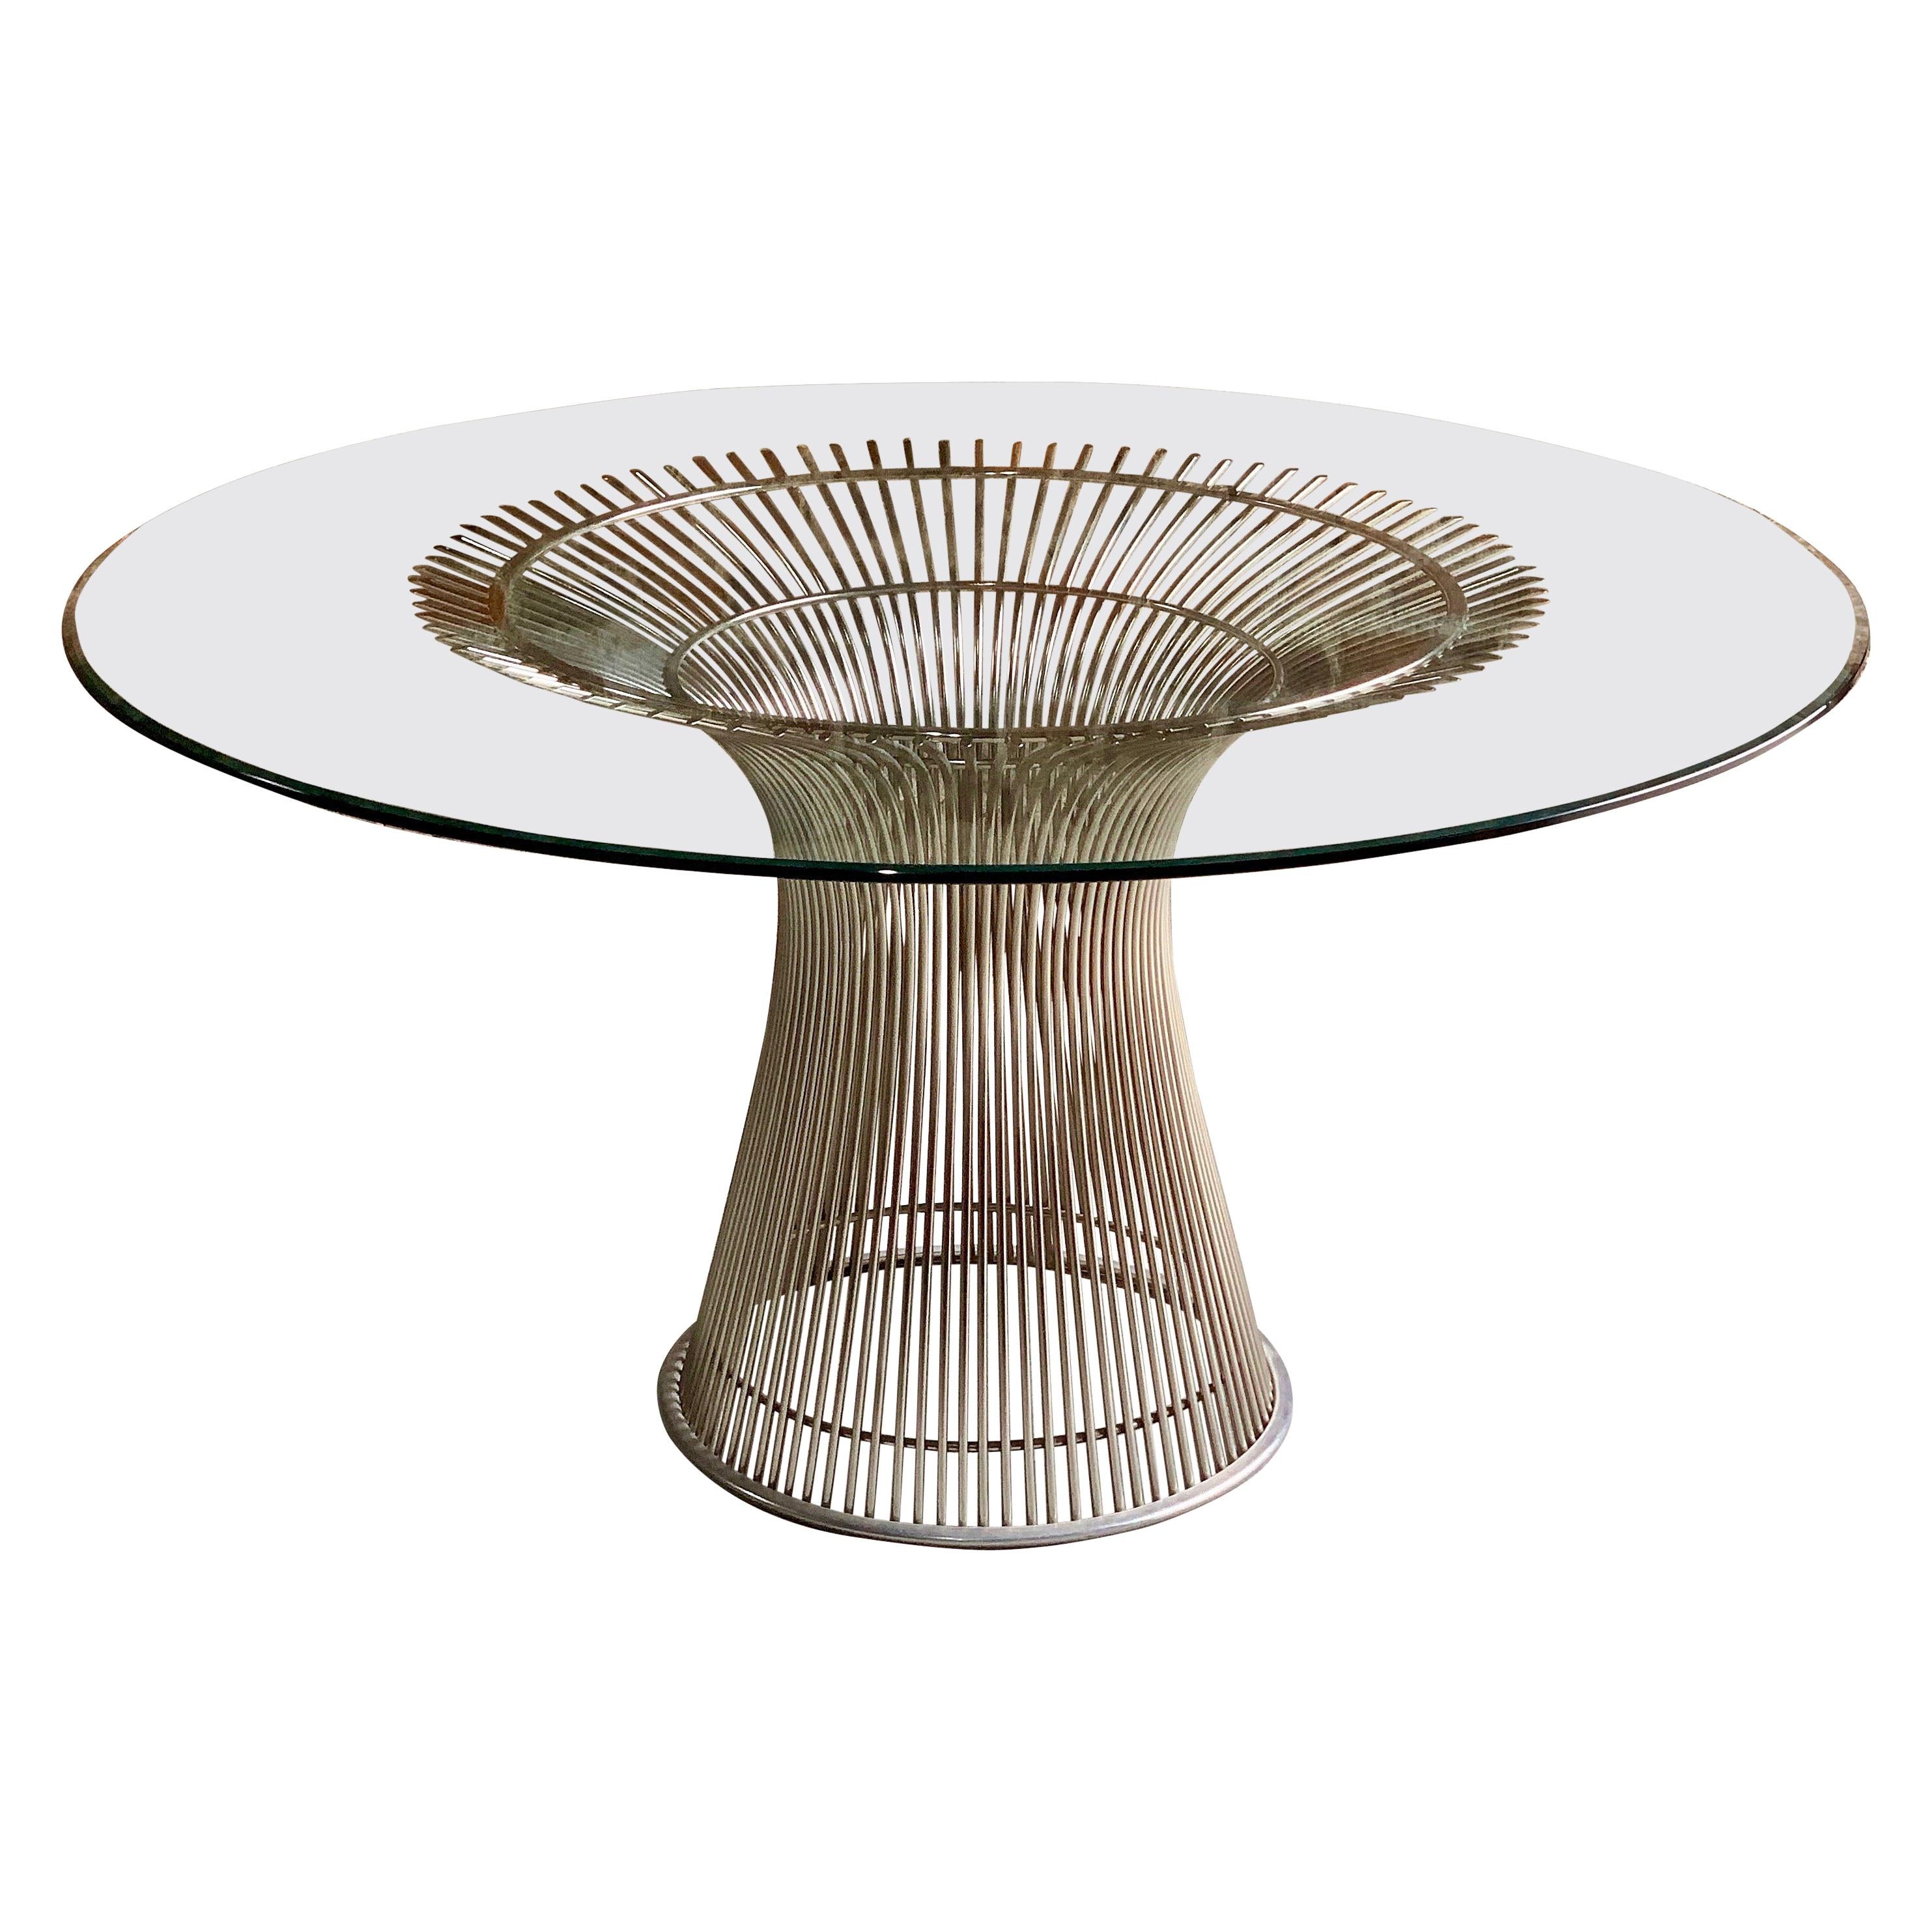 Platner Dining Table by Warren Platner for Knoll Mid-Century Modern Design